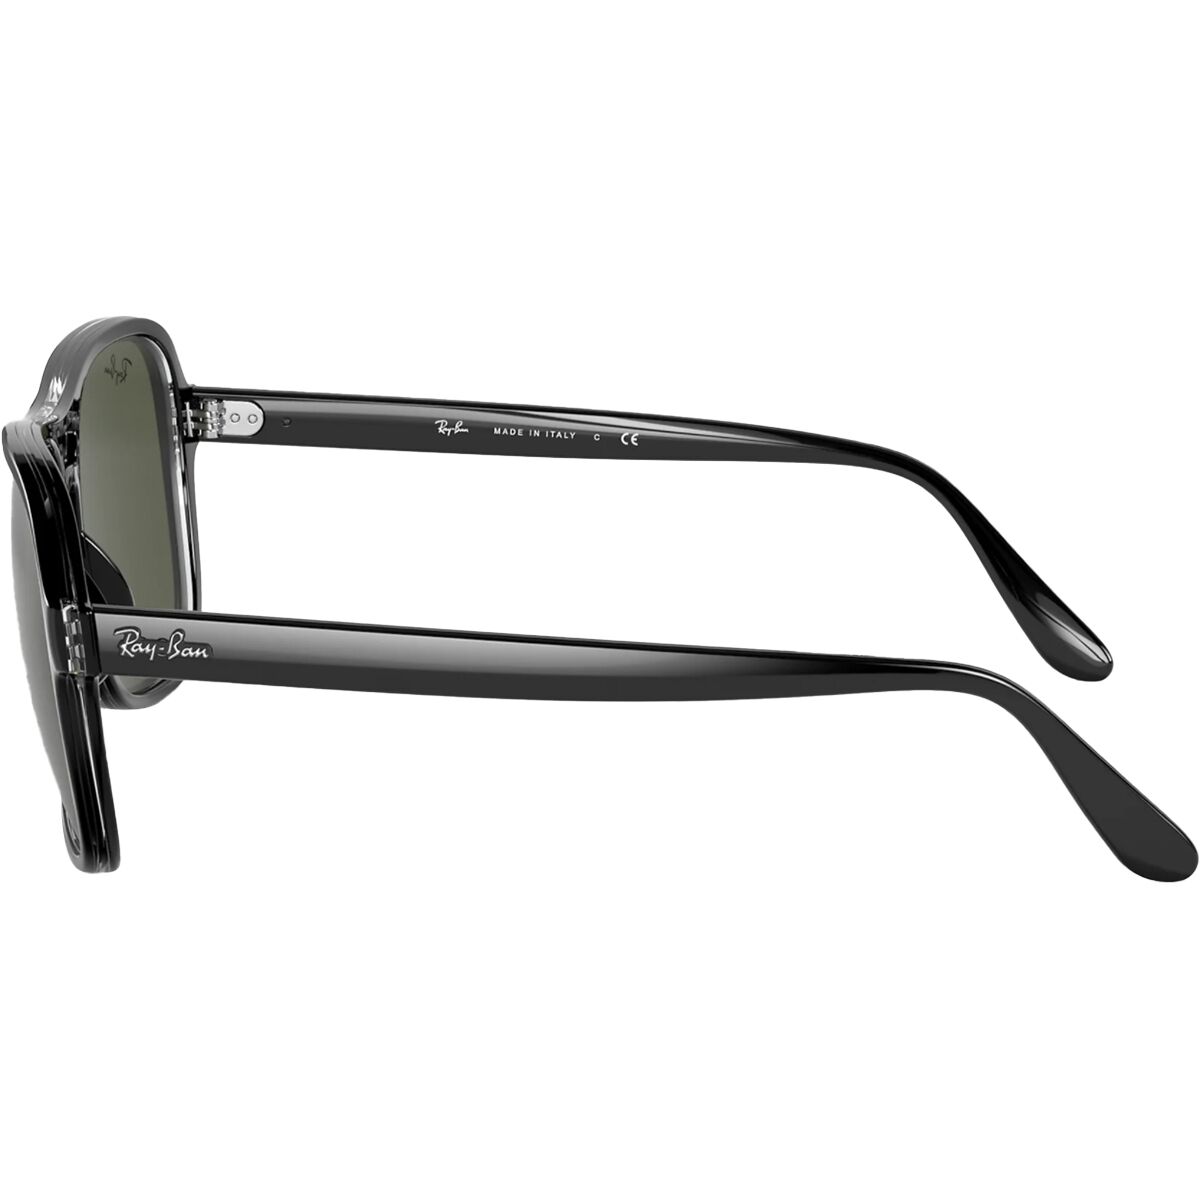 Ray-Ban Stateside Sunglasses - Accessories